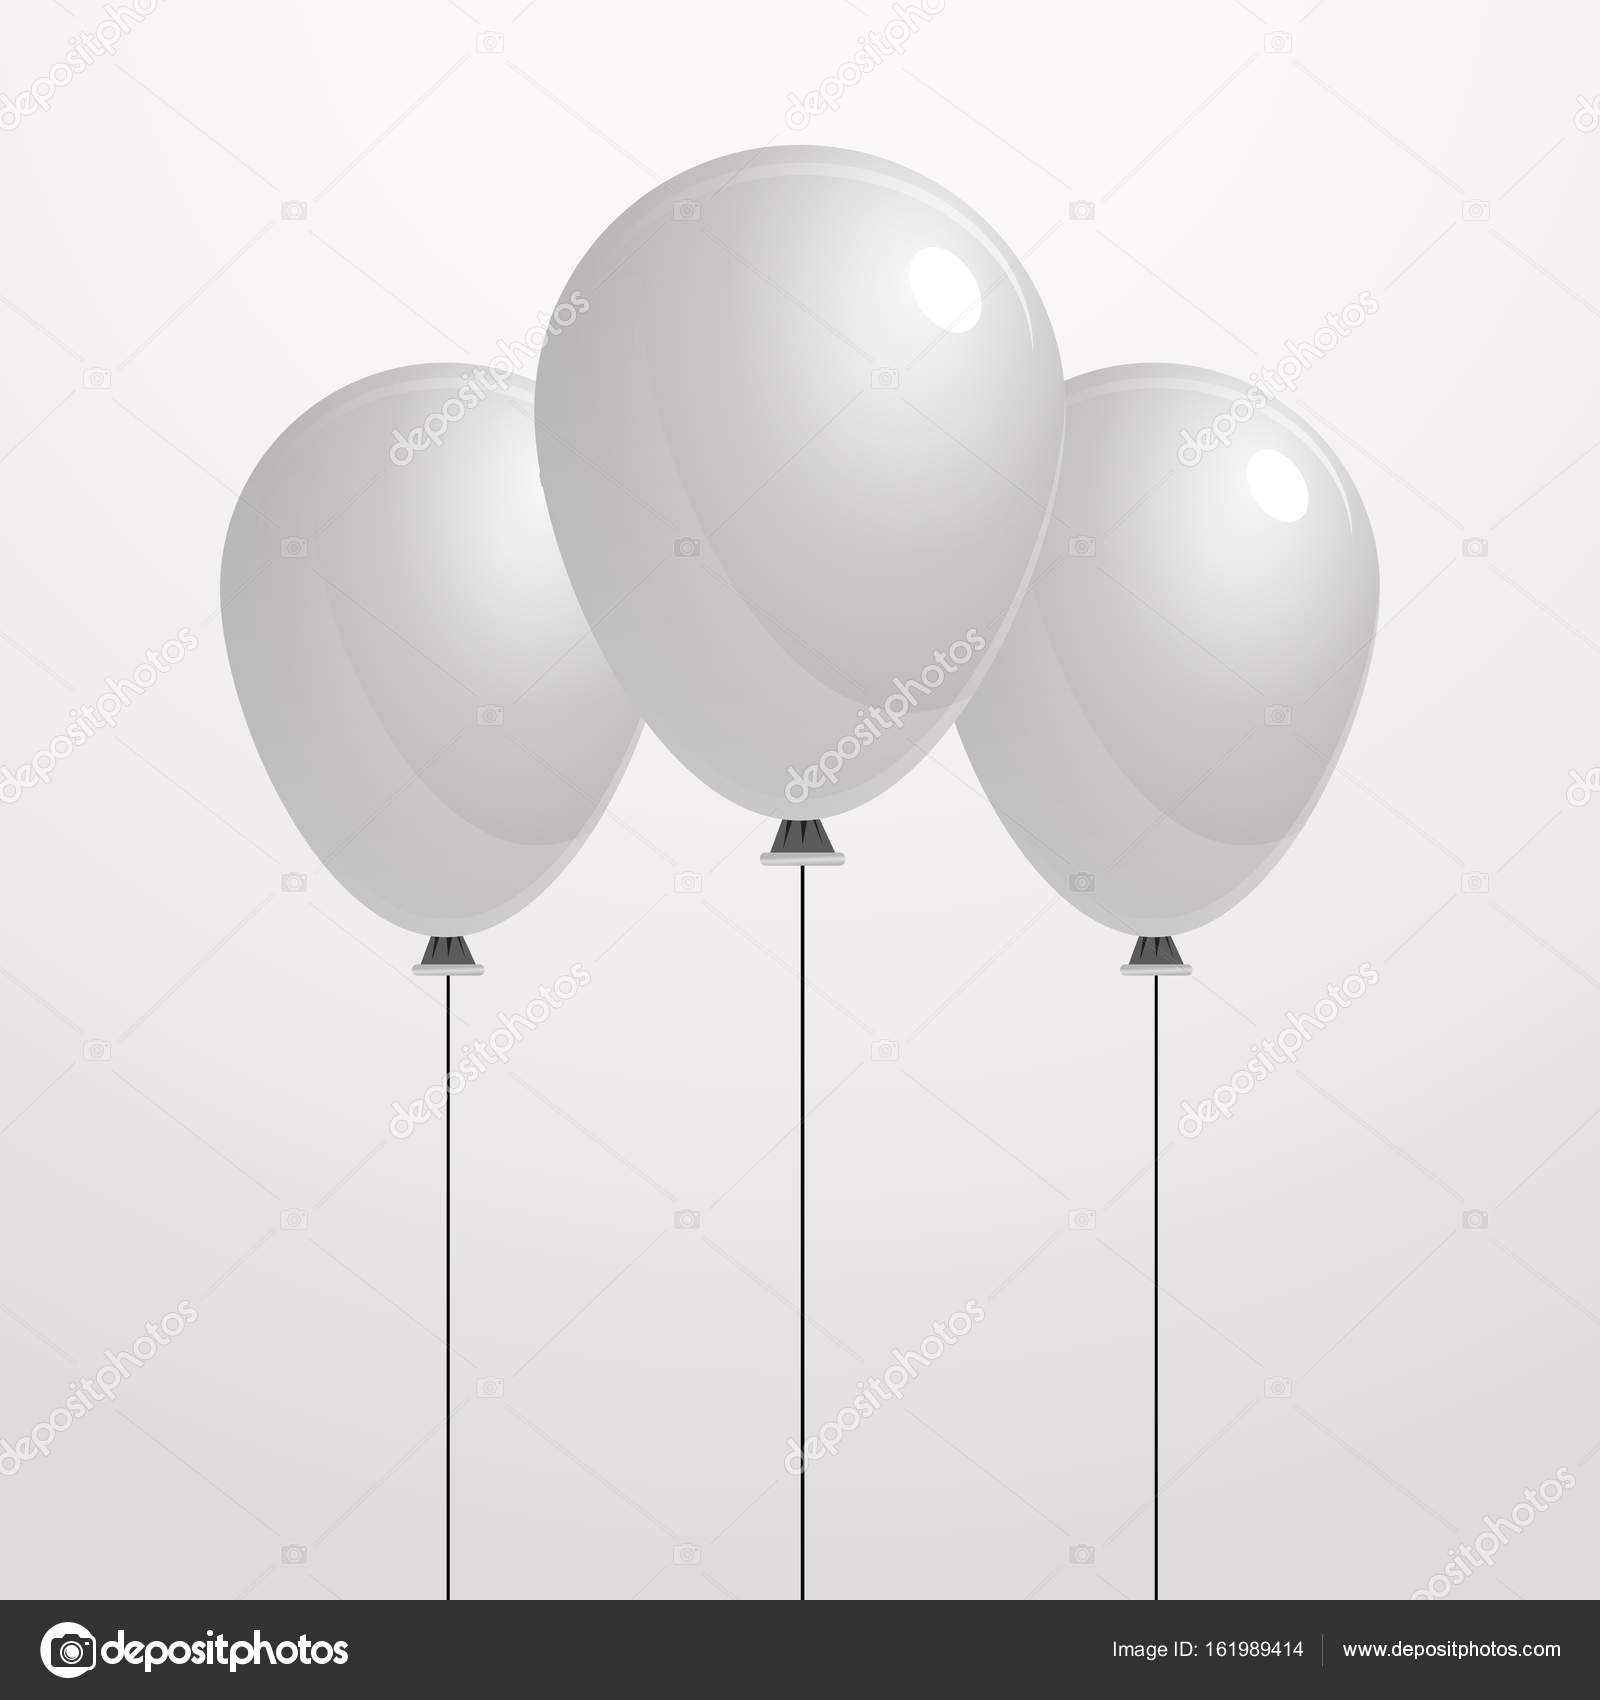 Download White Blank Balloon Mockup Eps 10 Illustration Design Vector Image By C Nikola82 Vector Stock 161989414